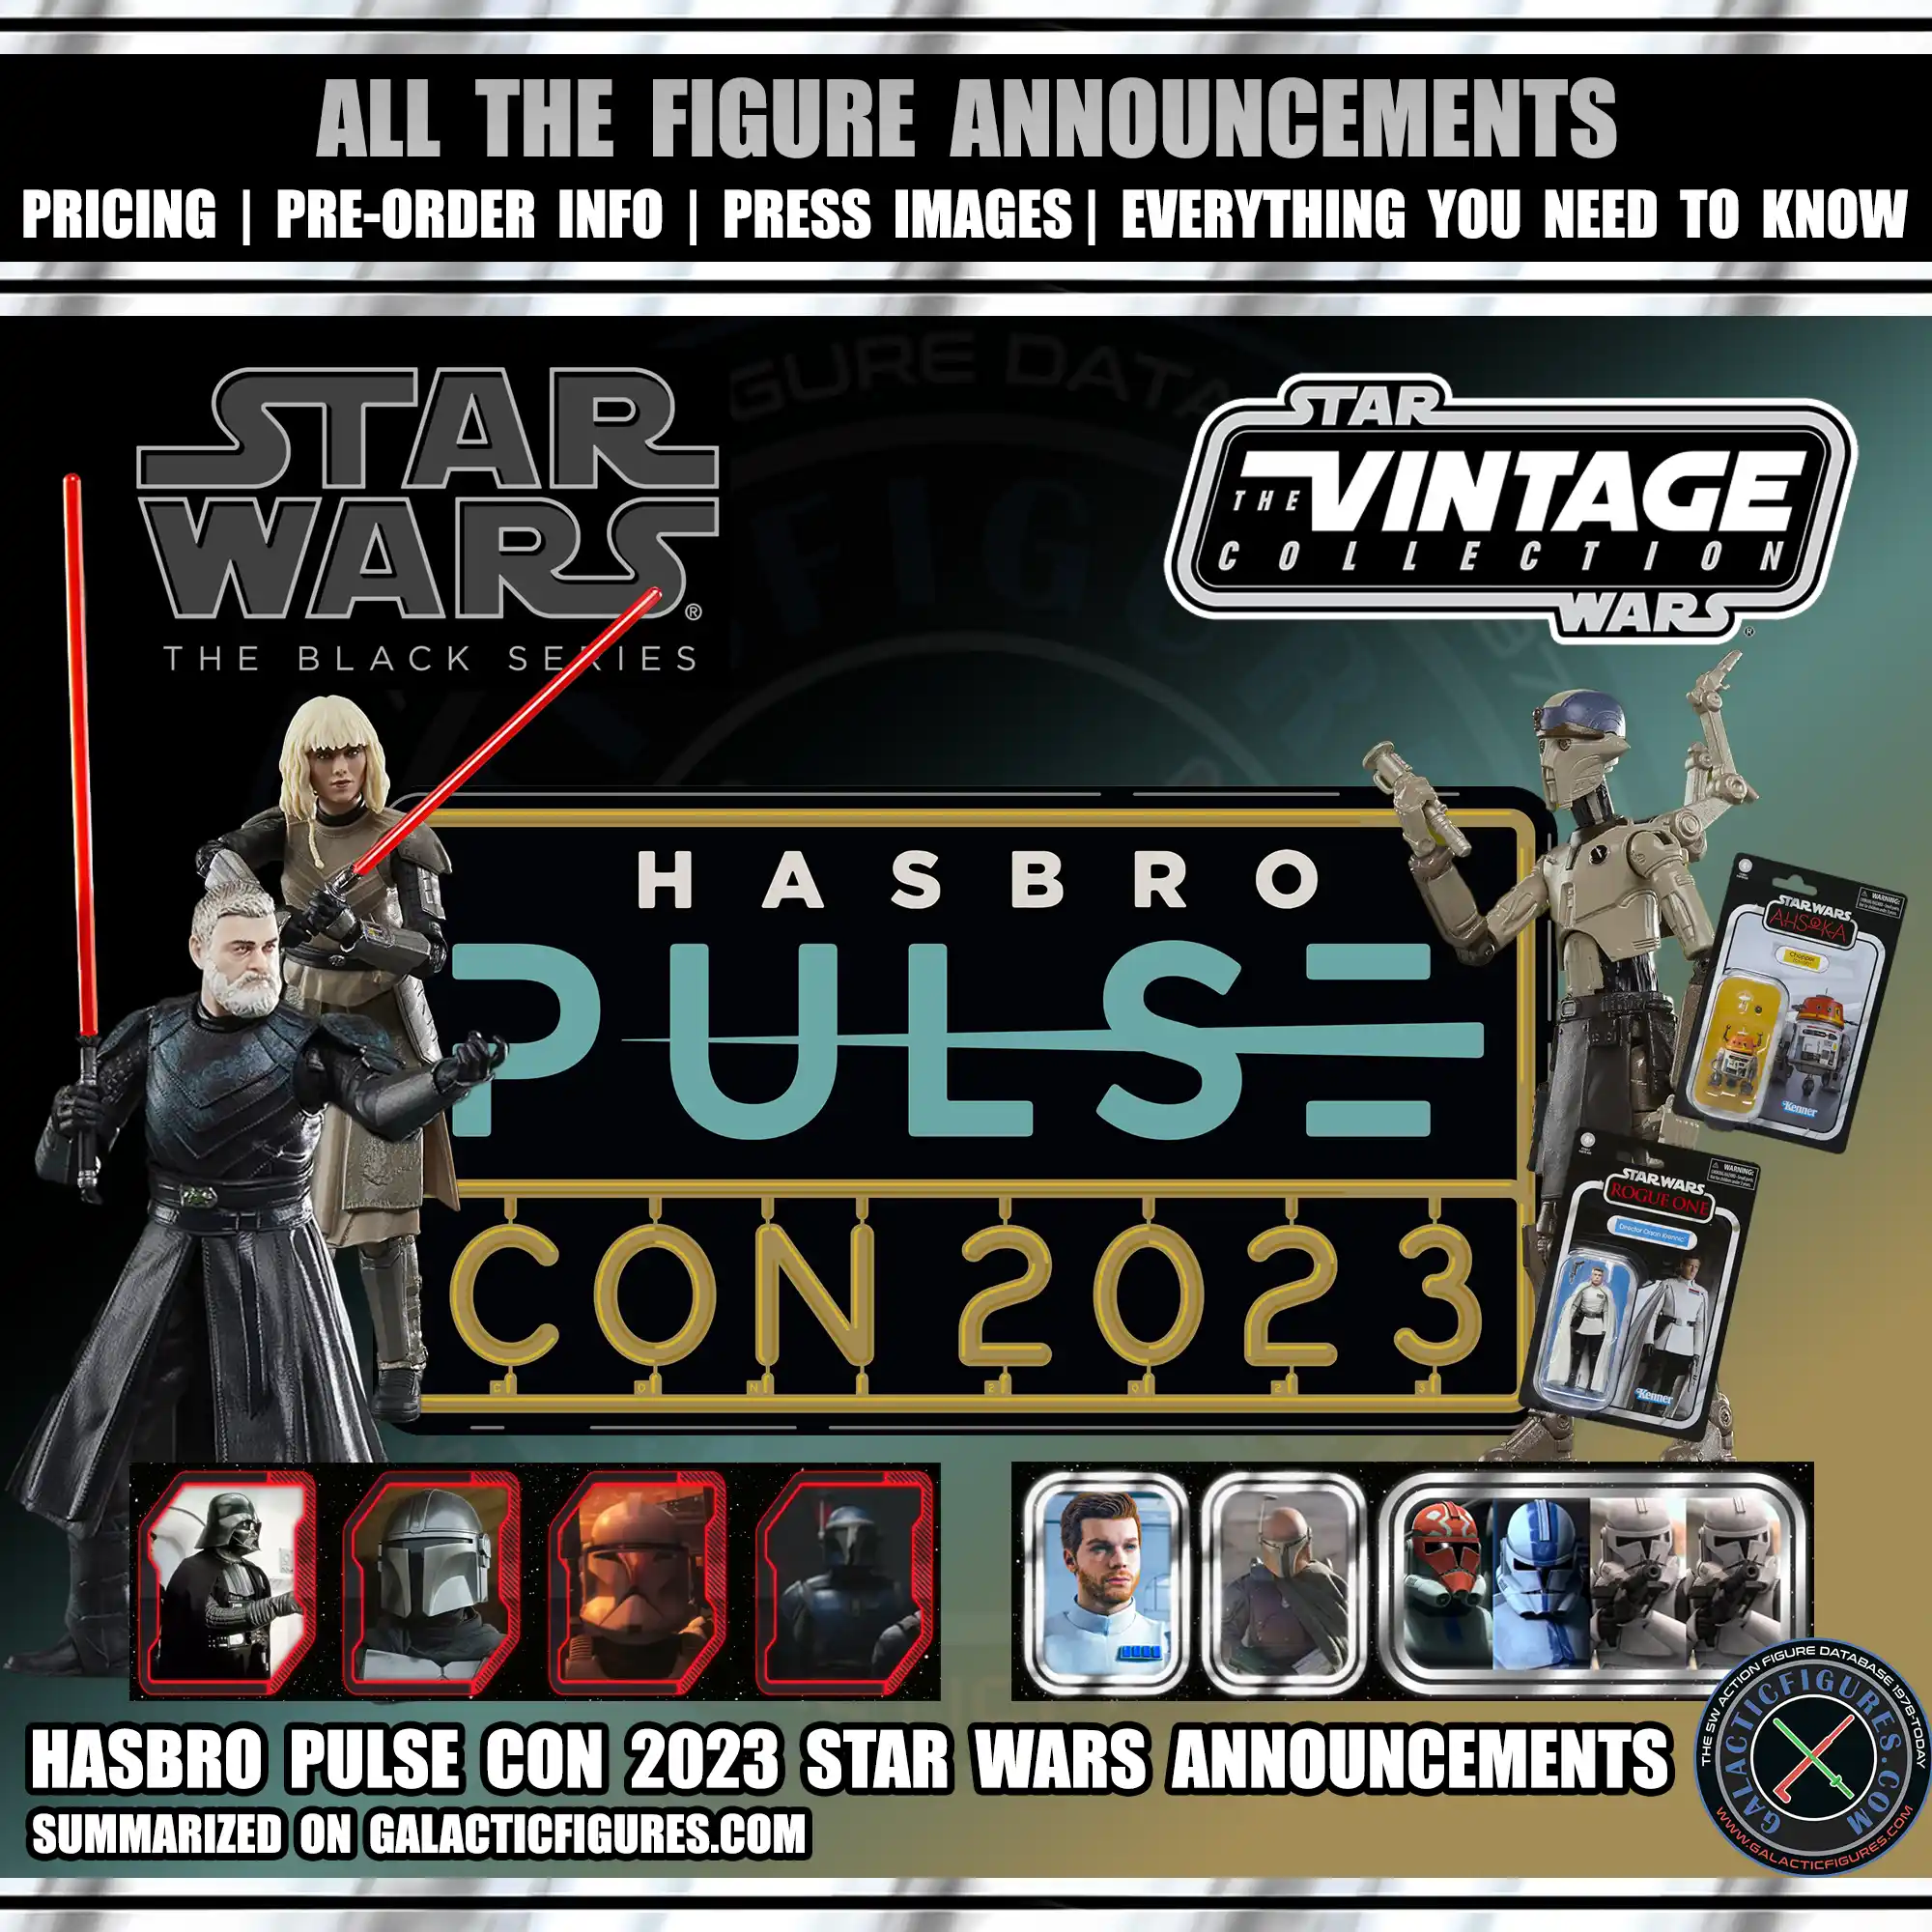 Hasbro Pulse Con 2023 Summary - All The Announcements